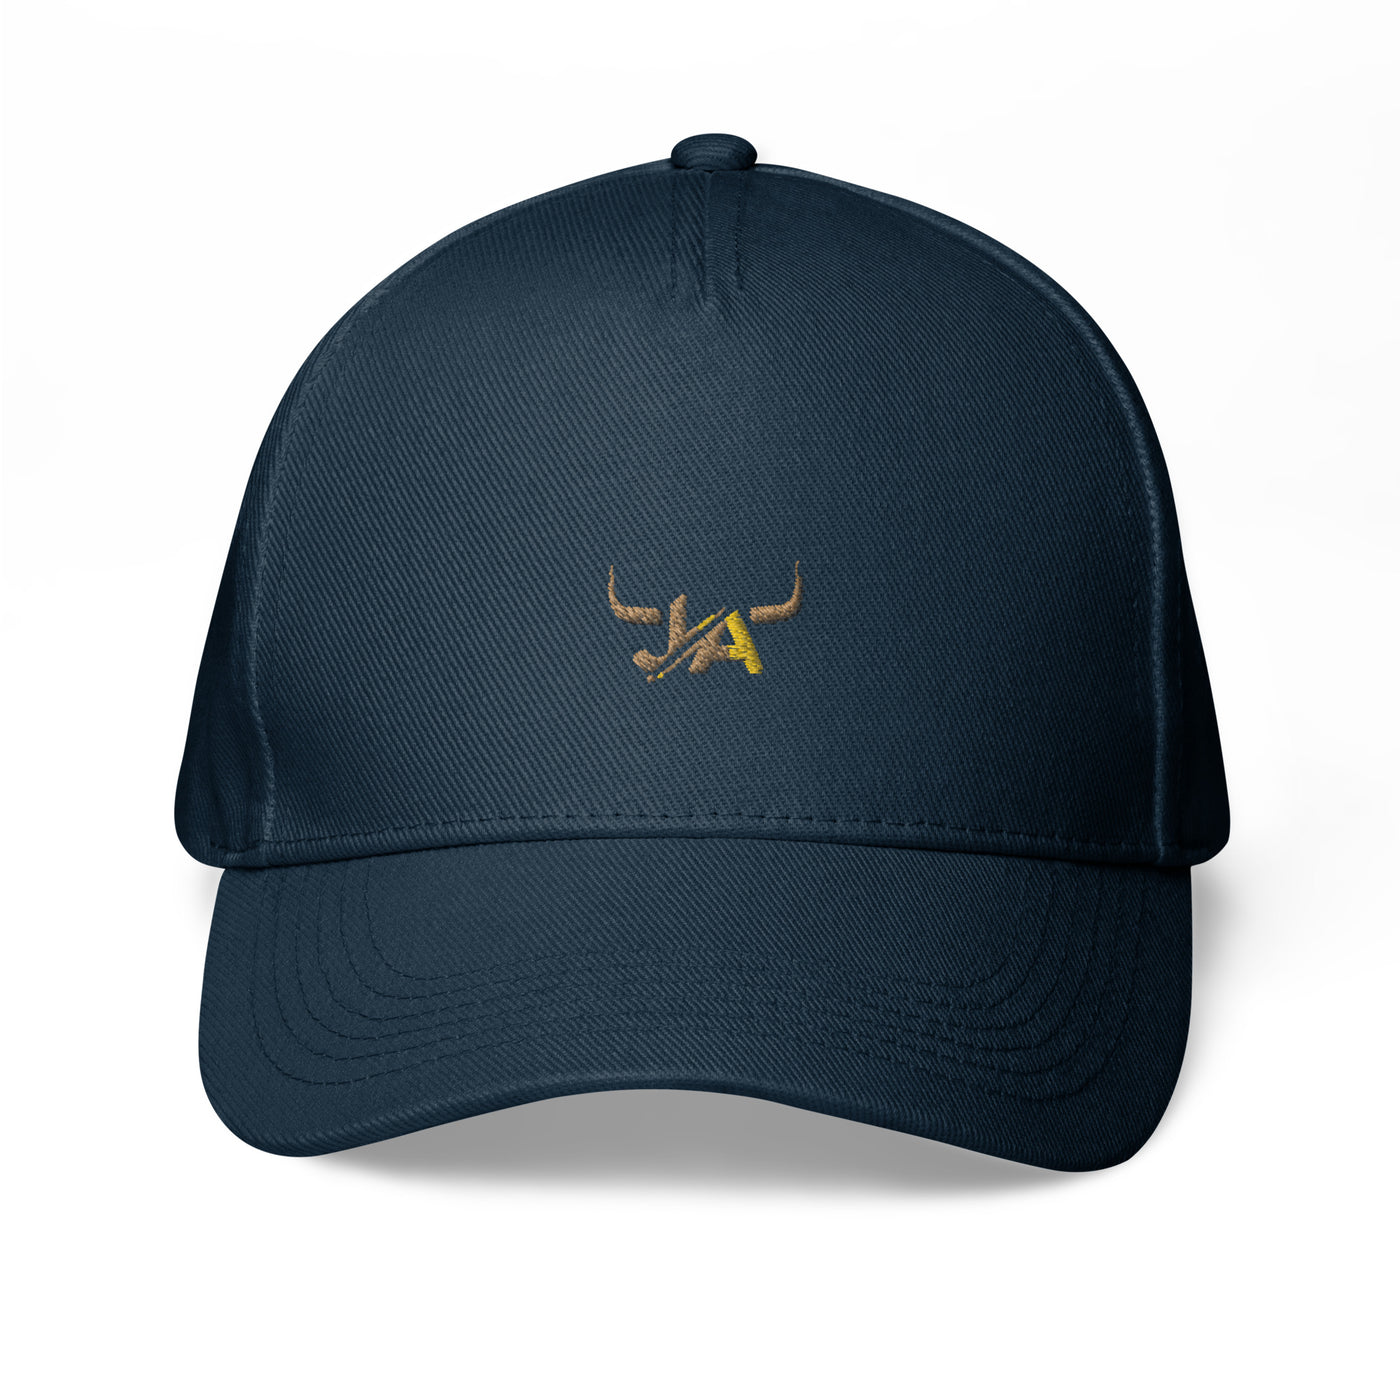 J.A Faith Classic baseball cap - J.AOfficial